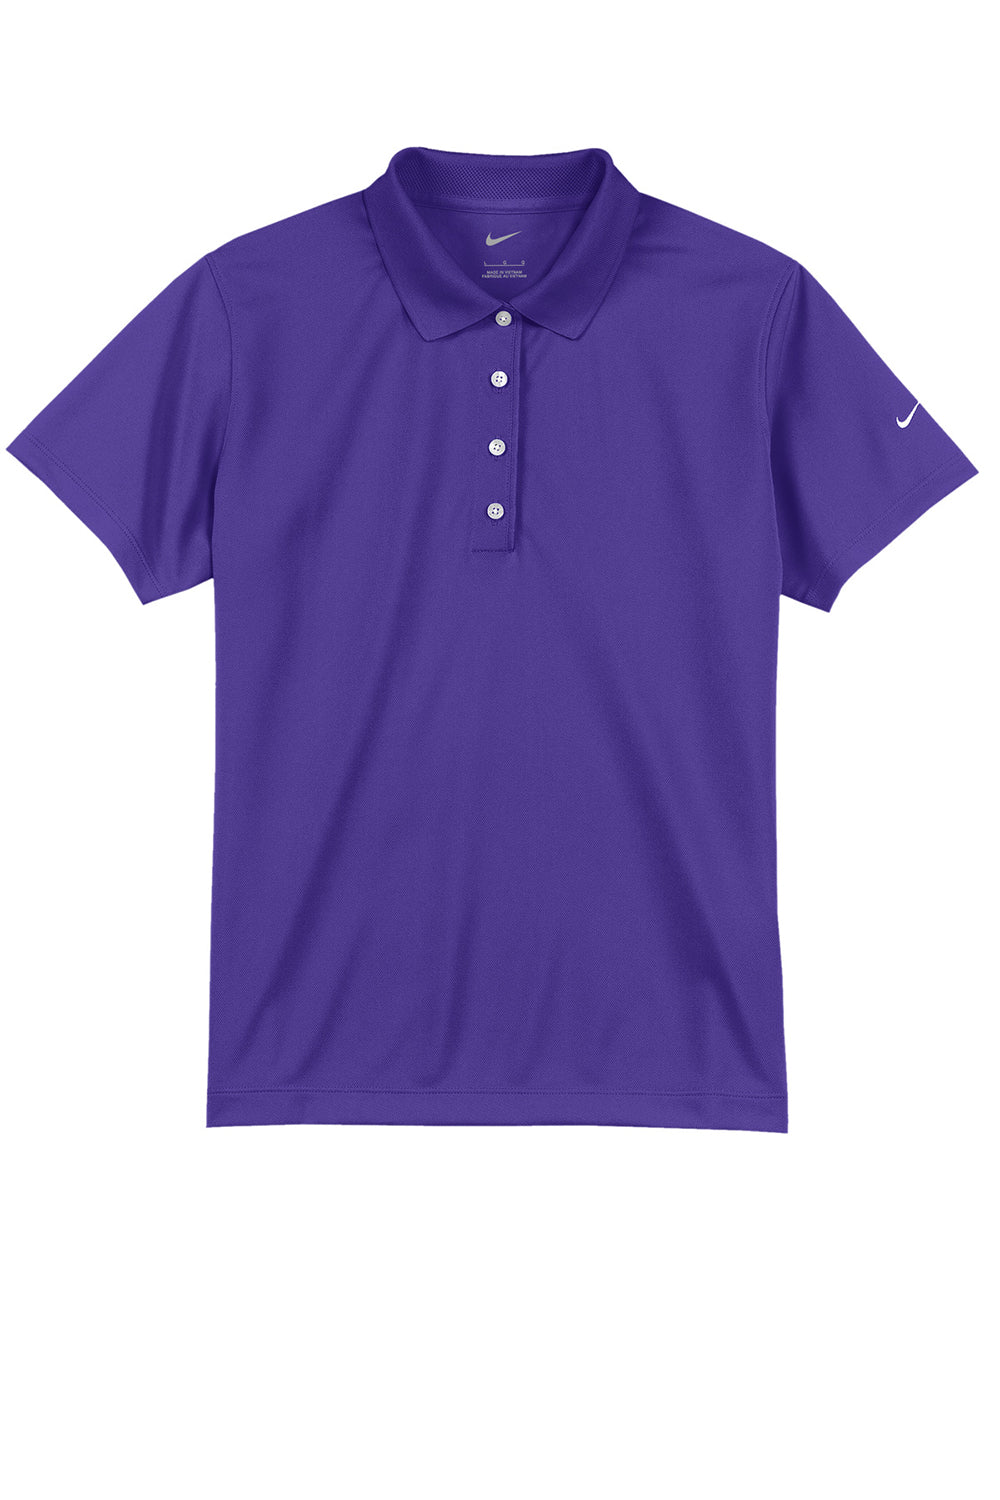 Nike 203697 Womens Tech Basic Dri-Fit Moisture Wicking Short Sleeve Polo Shirt Varsity Purple Flat Front